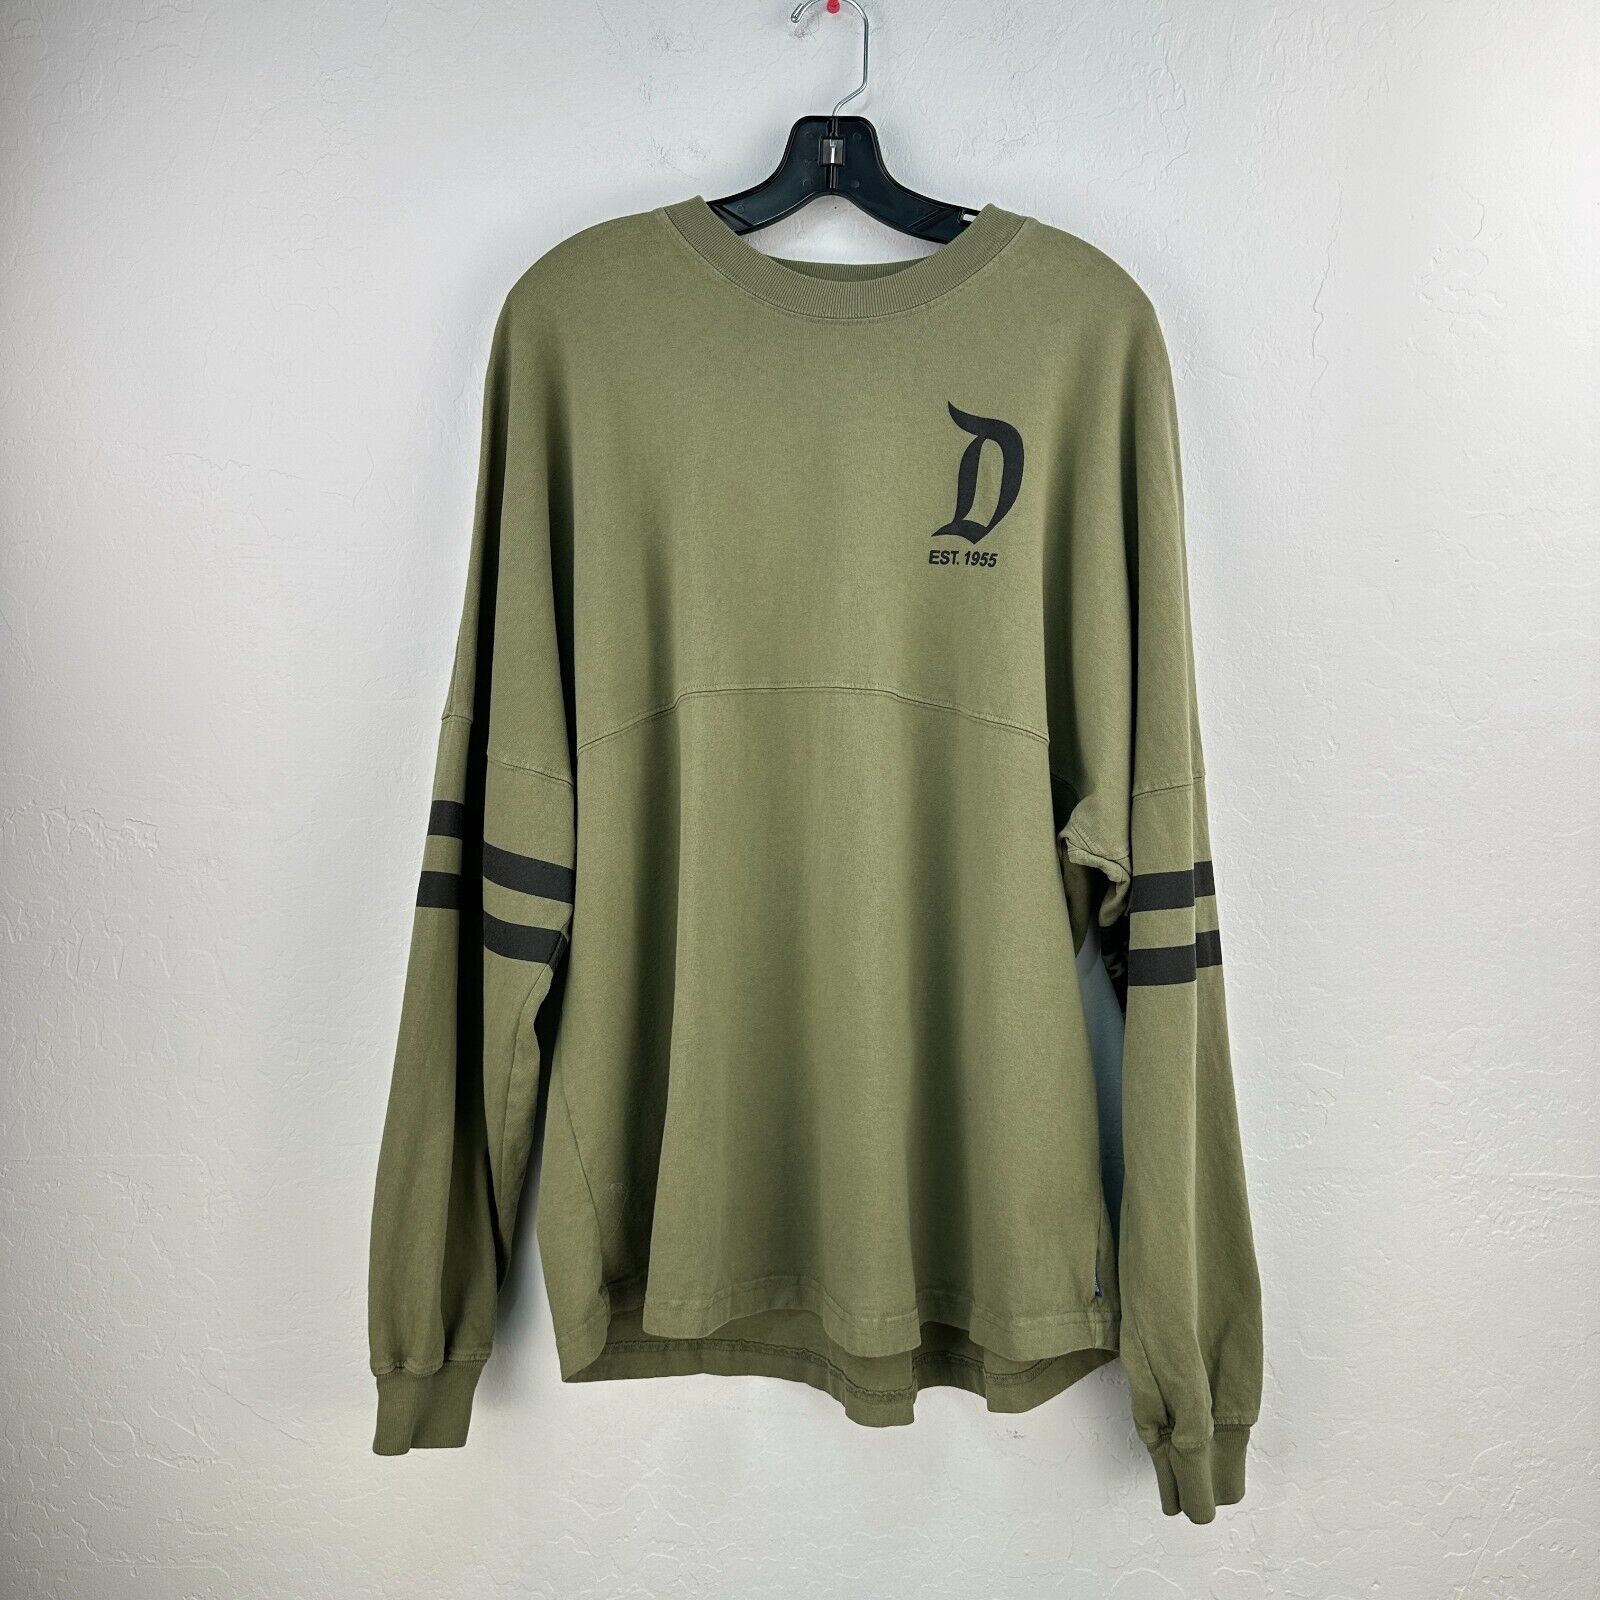 Disneyland Resort Spirit Jersey Shirt Womens XL Olive Green Black Long Sleeve